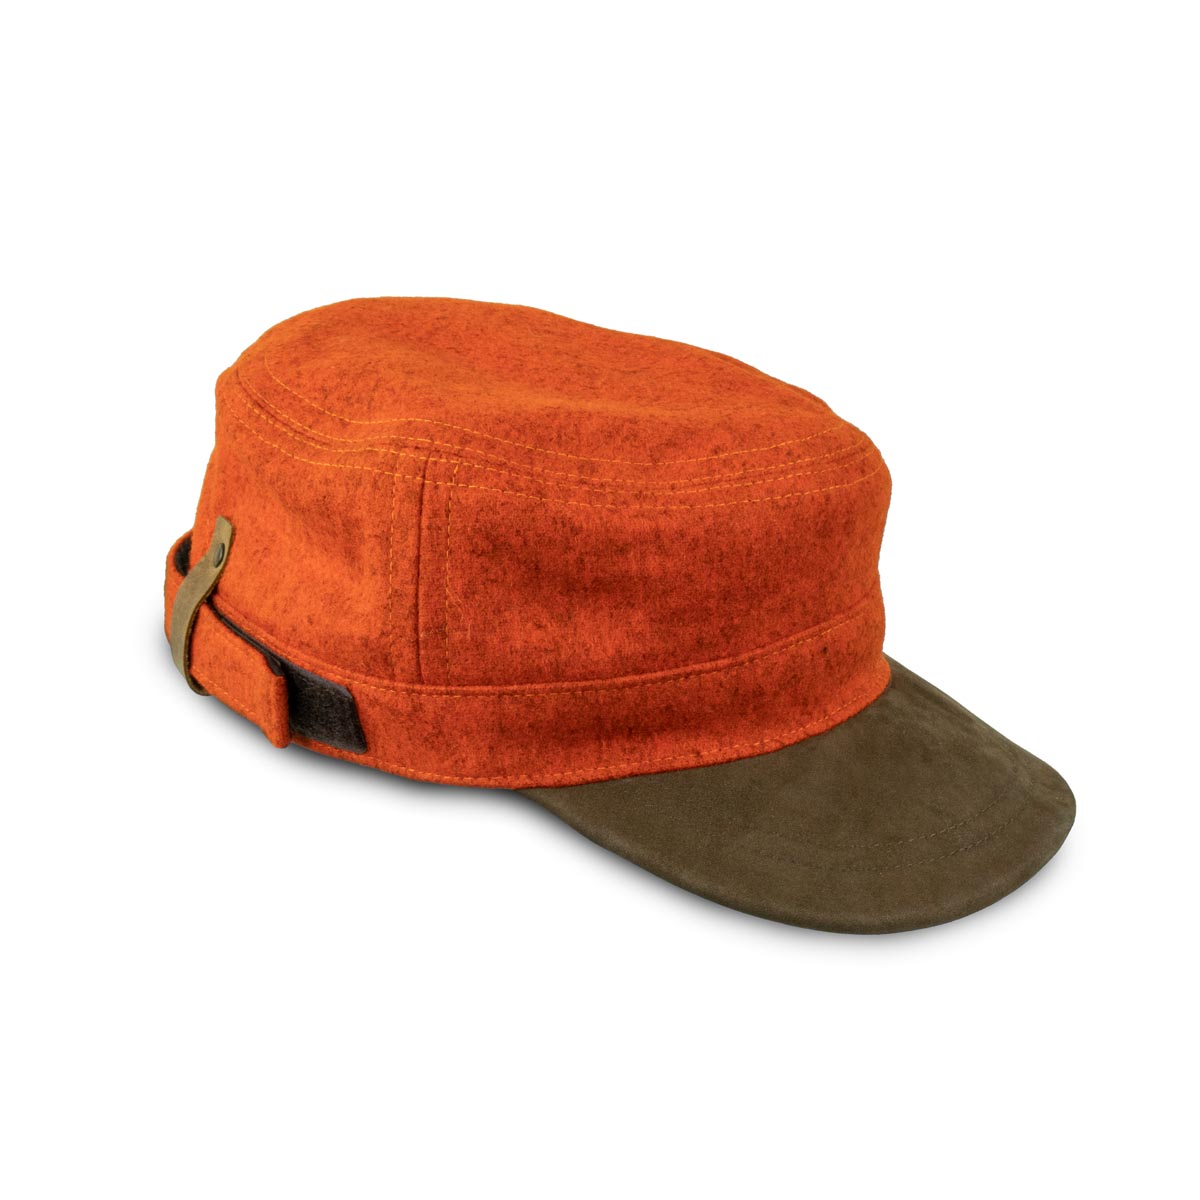 Field Cap, orange